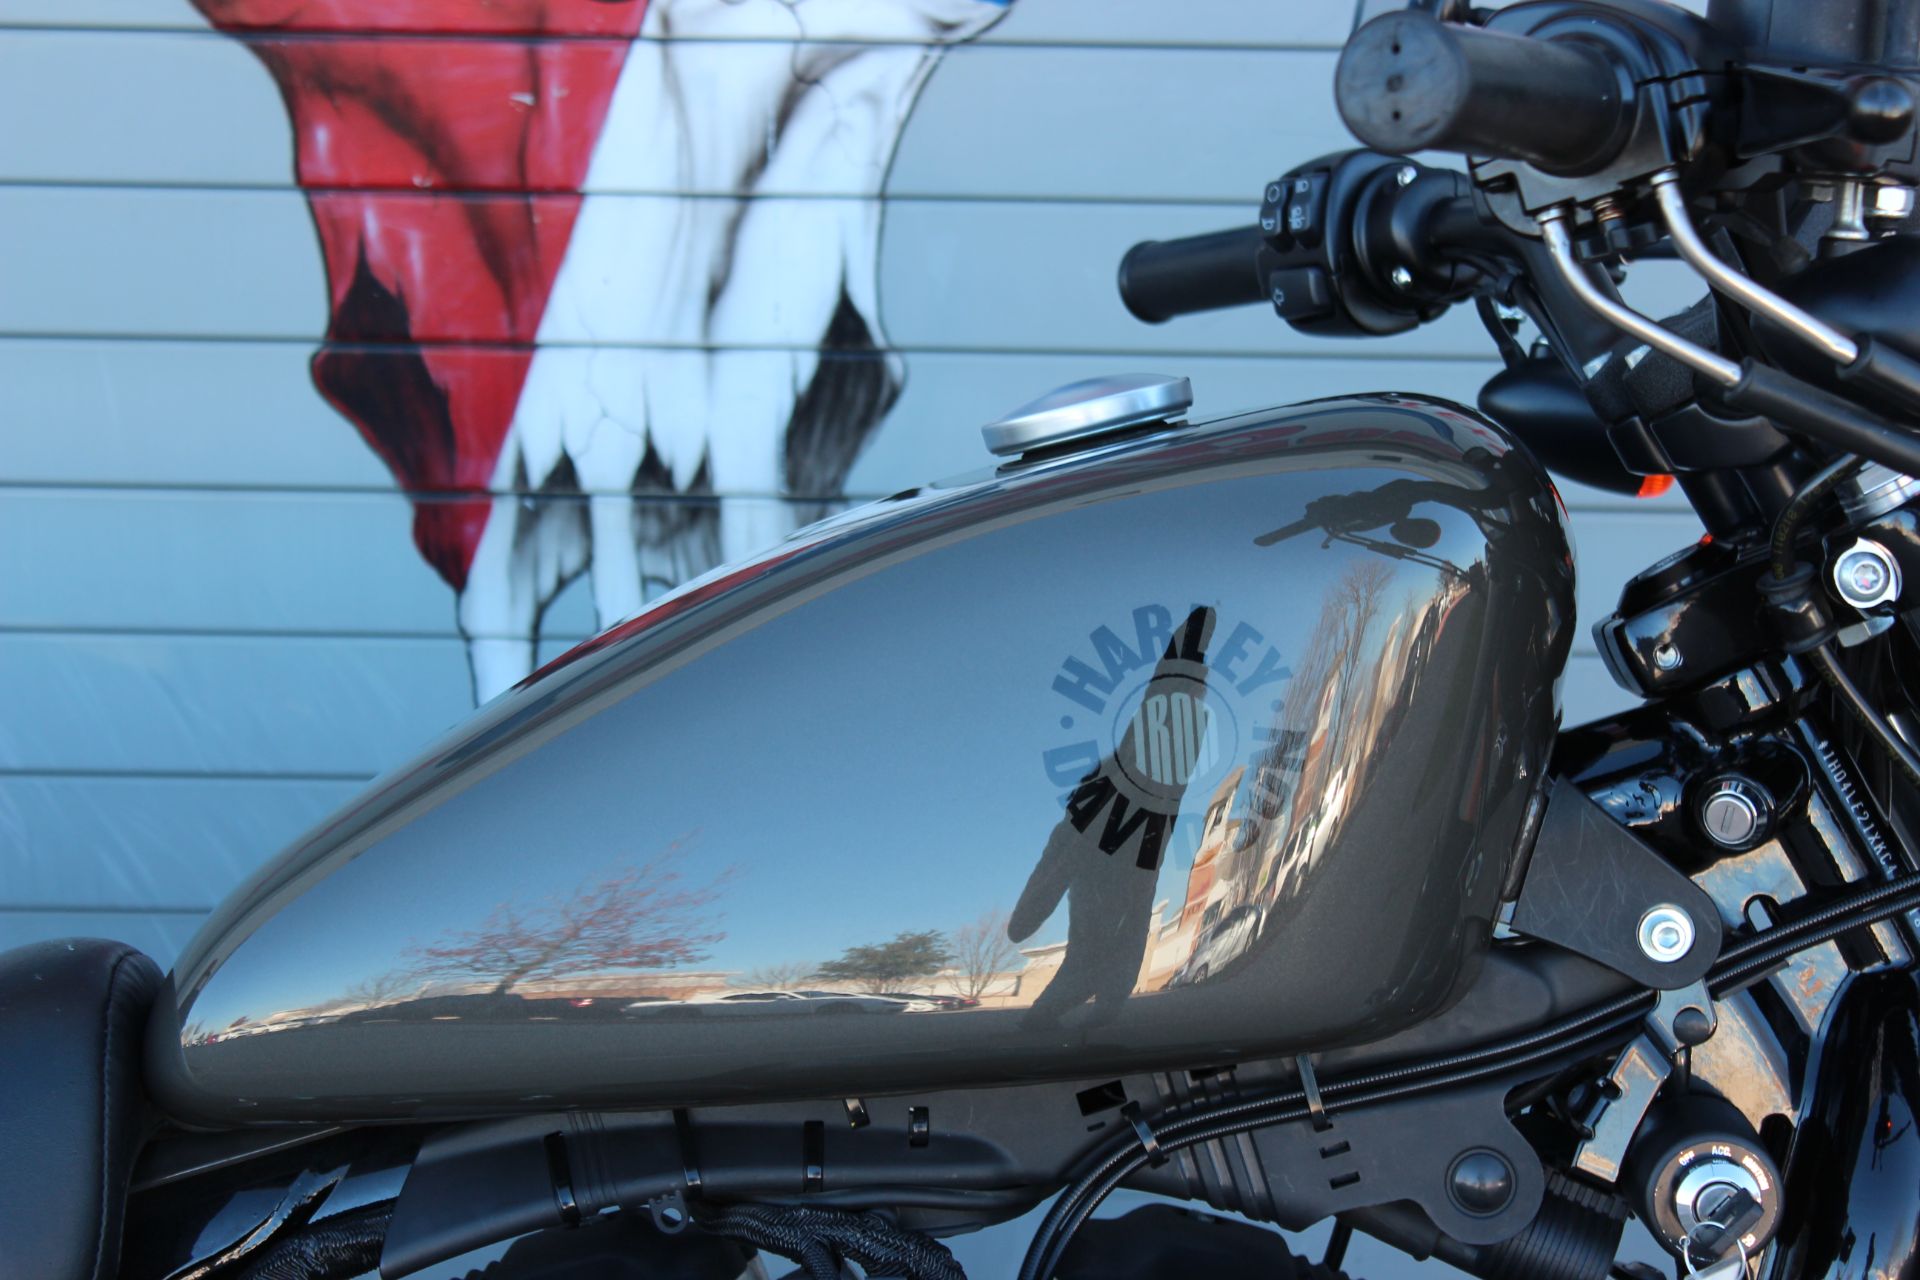 2019 Harley-Davidson Iron 883™ in Grand Prairie, Texas - Photo 6